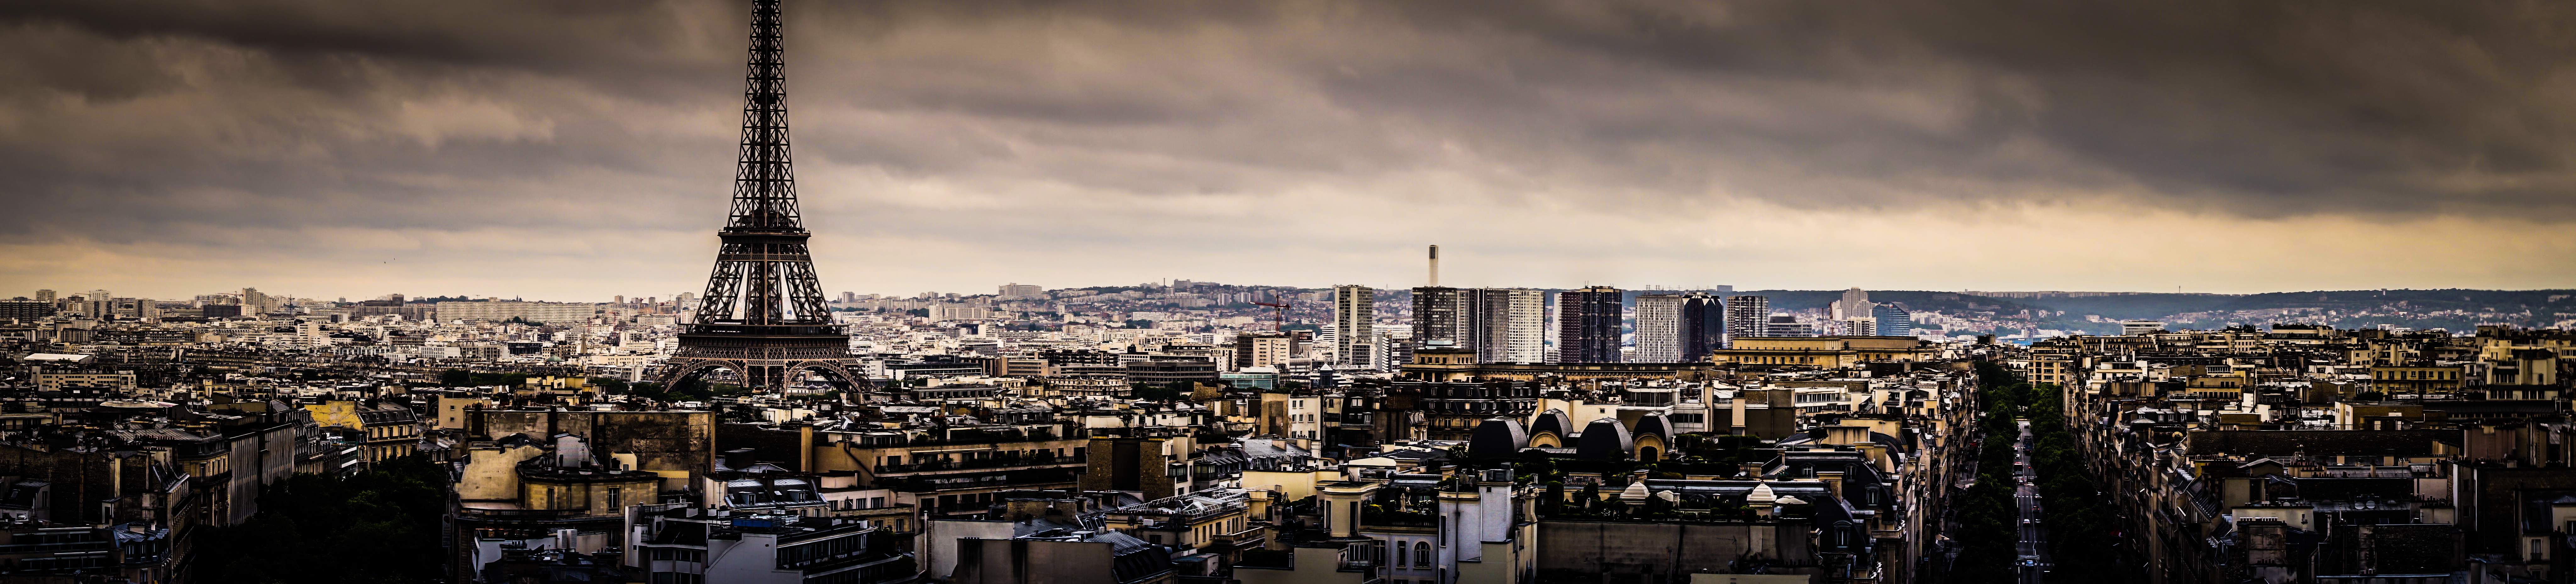 Paris Skyline | jeff haltrecht photoblog